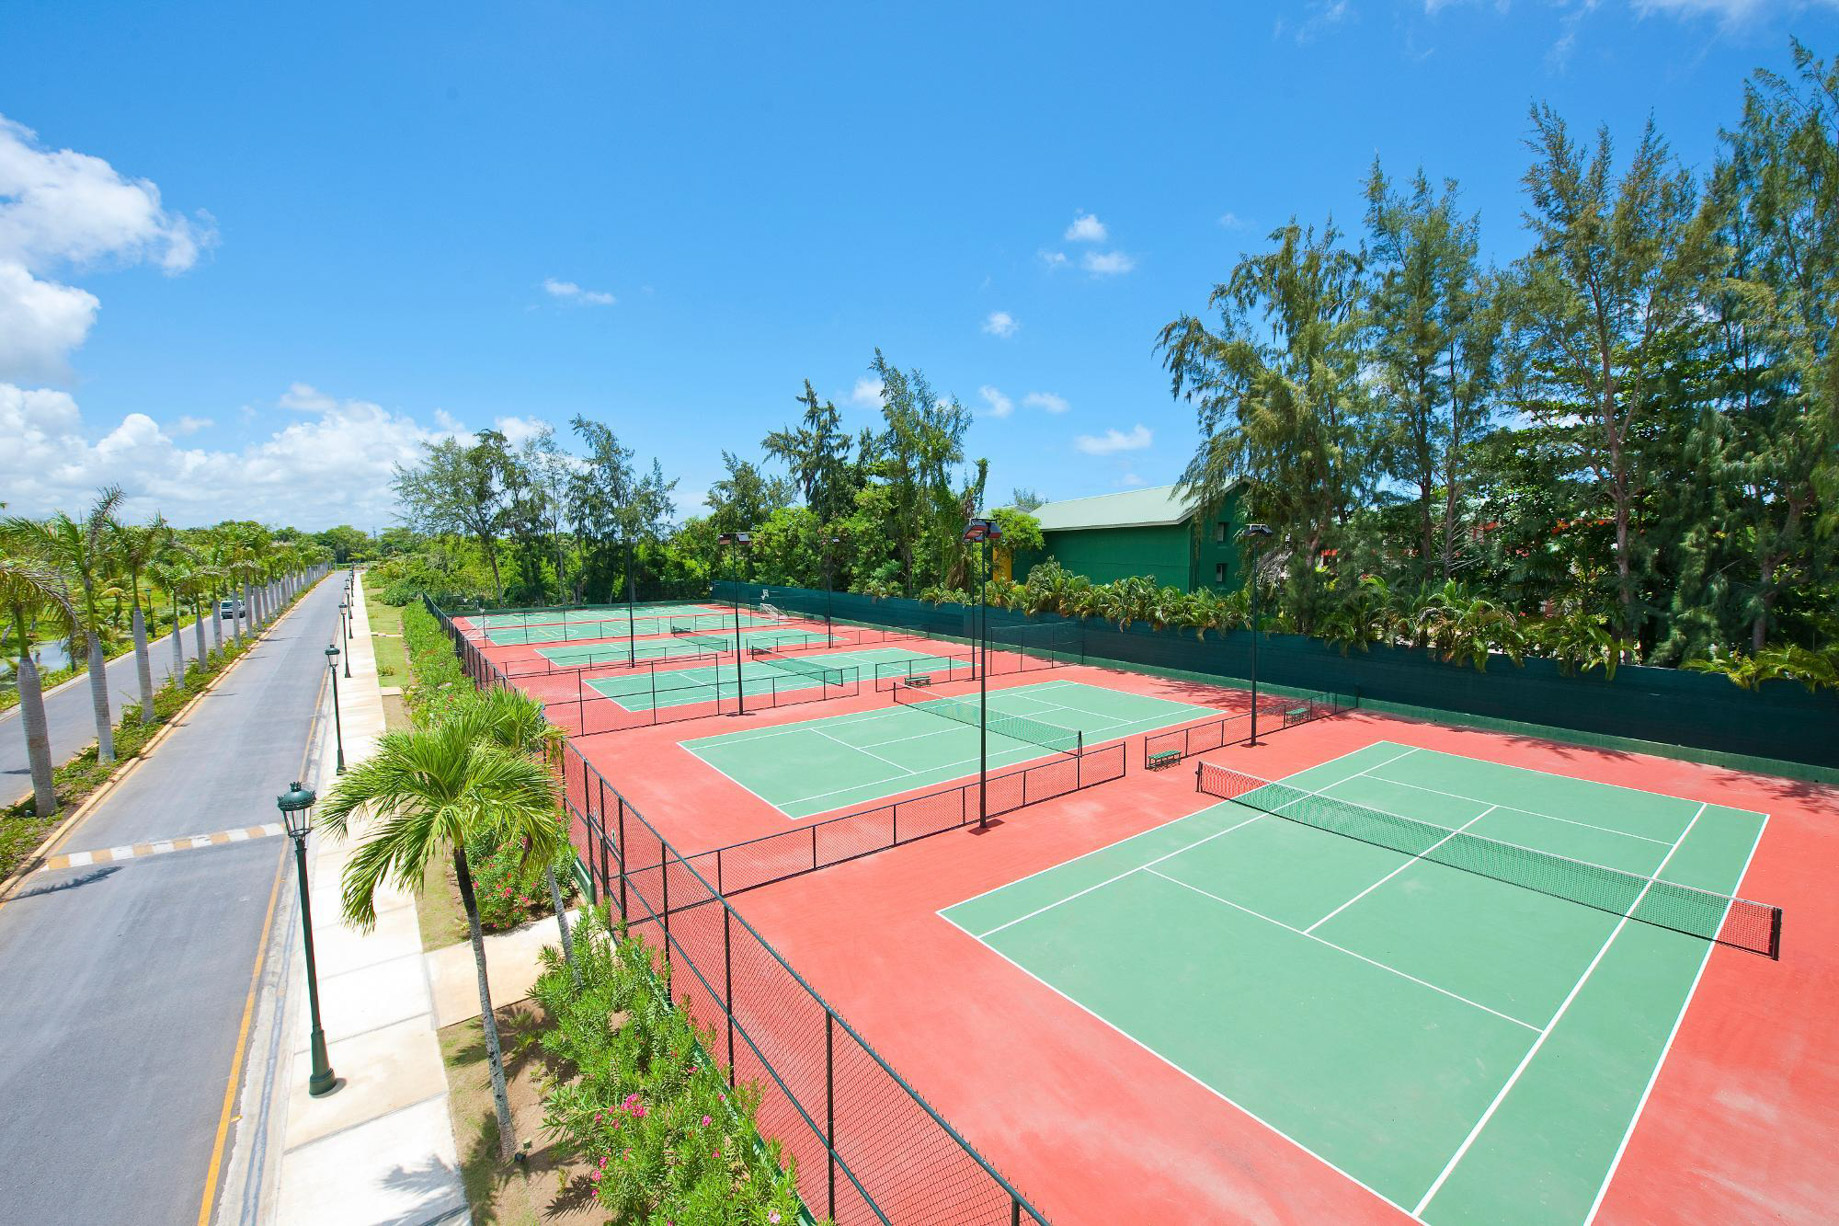 Barceló Bávaro Beach Hotel Grand Resort - Punta Cana, Dominican Republic - Tennis